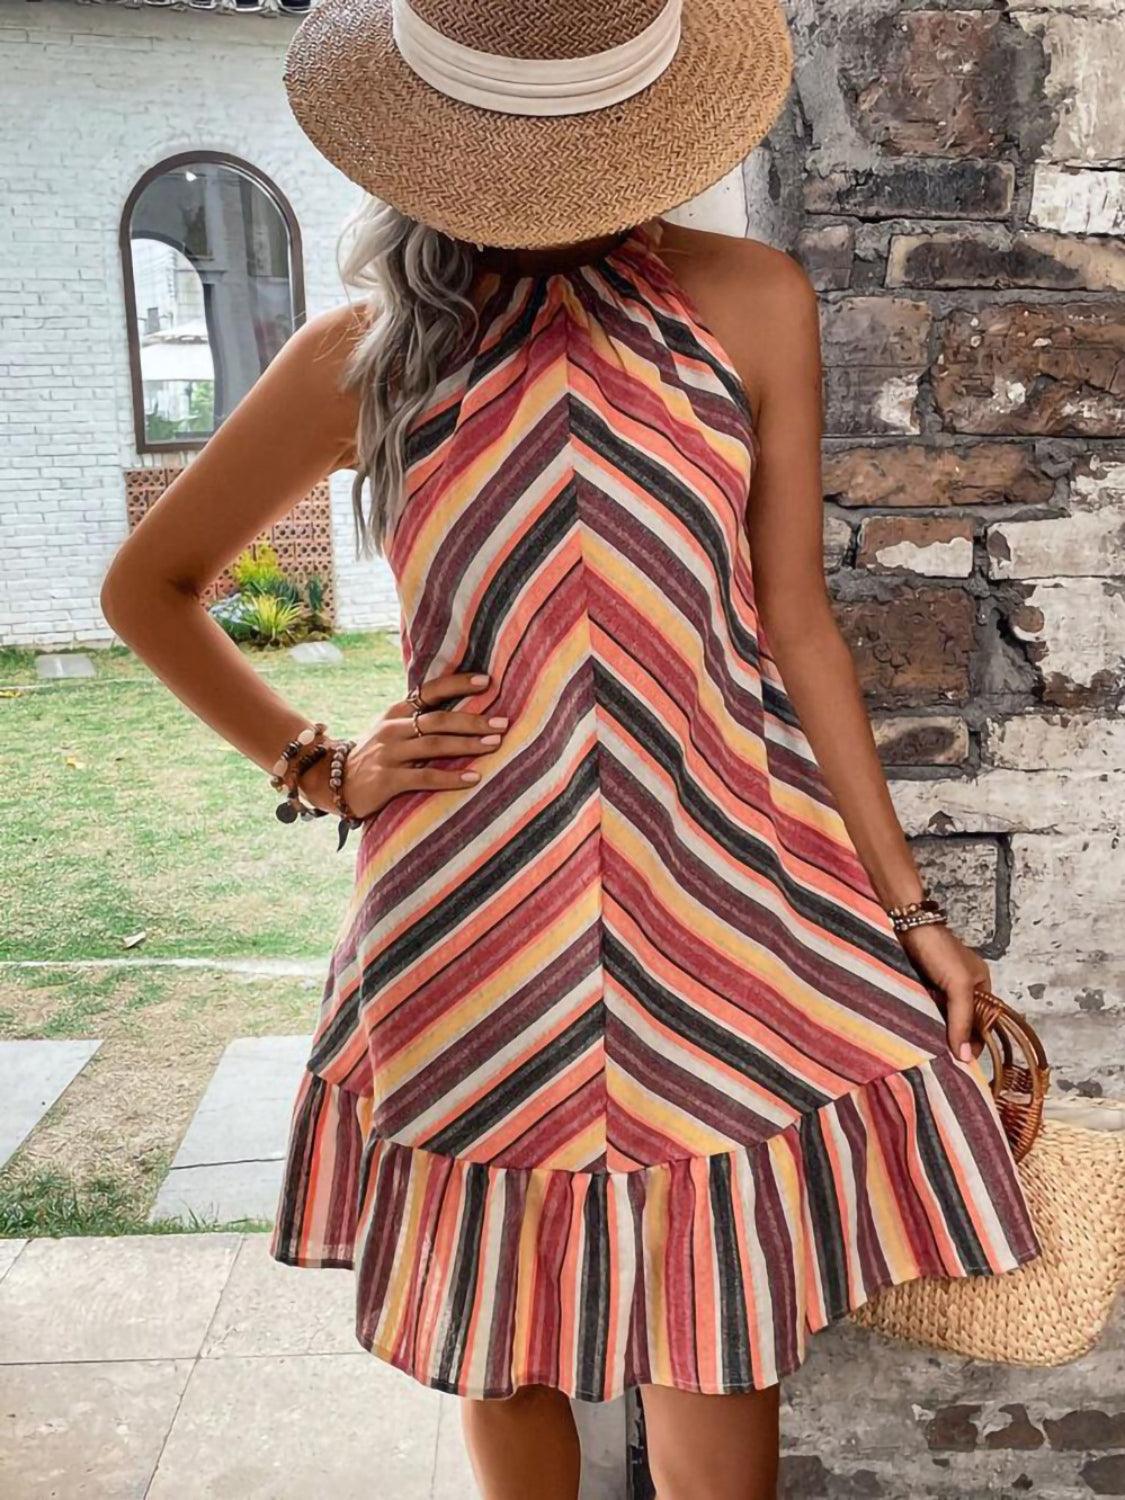 Bona Fide Fashion - Striped Grecian Neck Dress - Women Fashion - Bona Fide Fashion